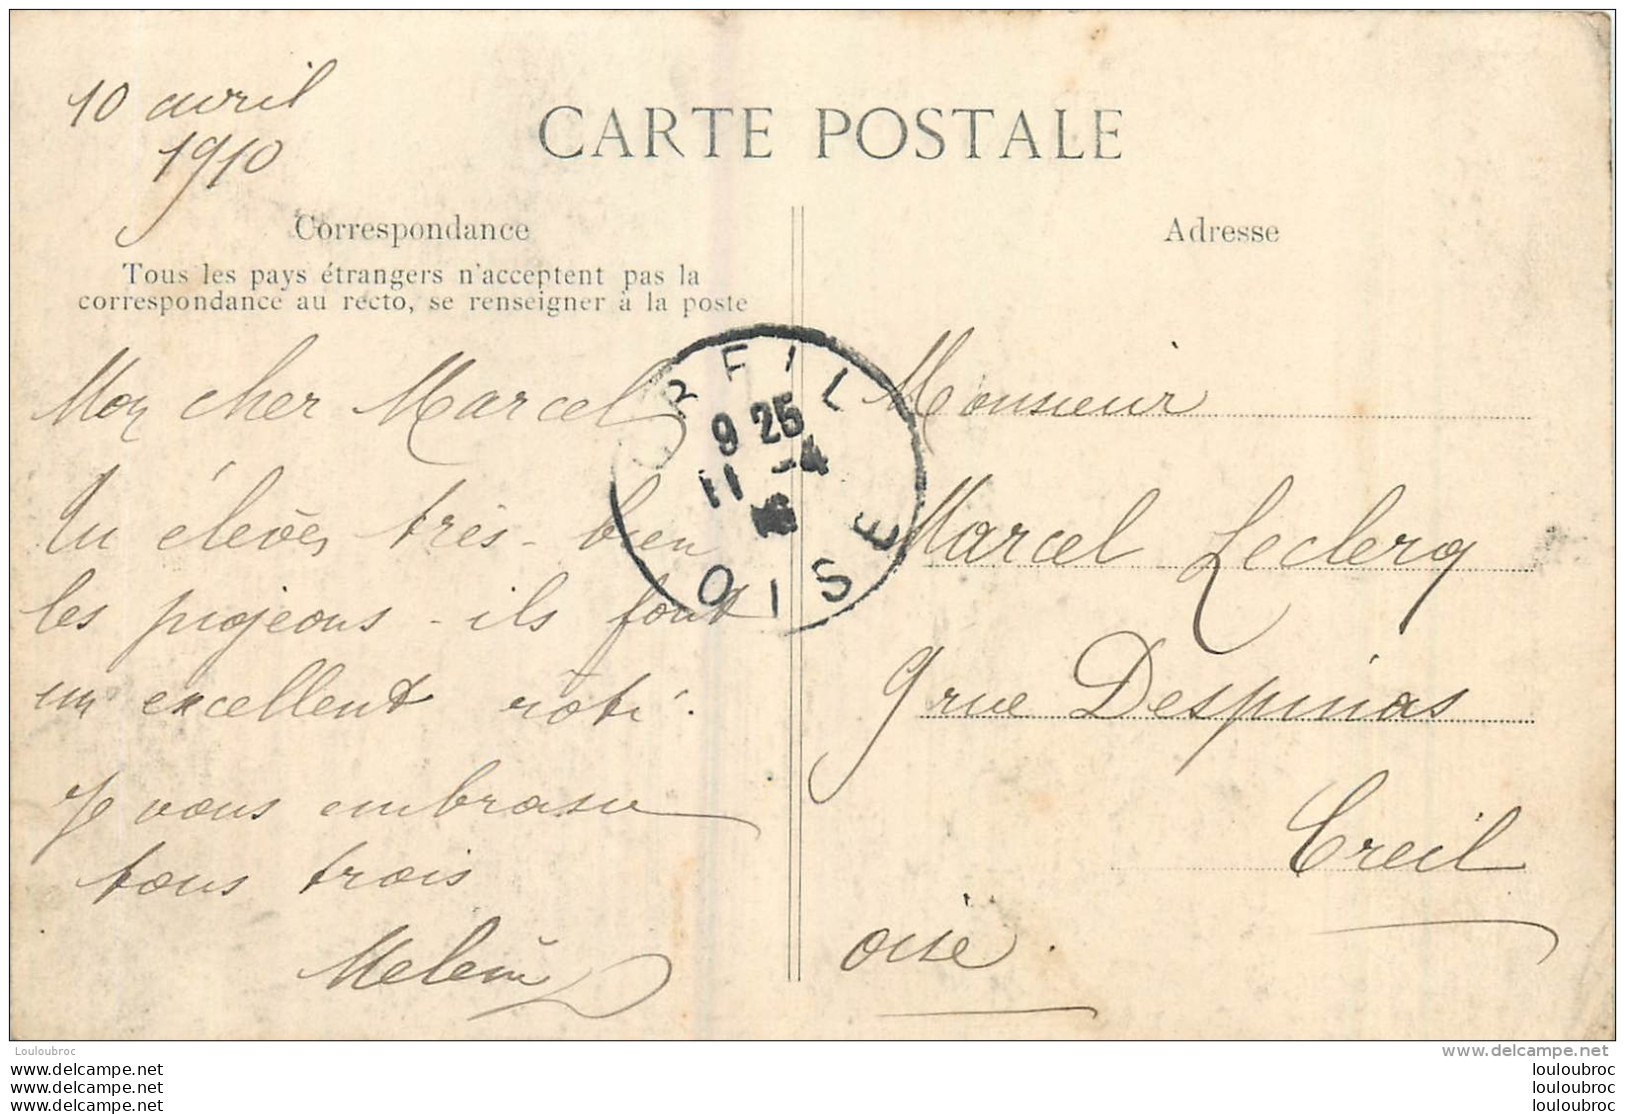 PARIS VII AVENUE RAPP CRUE DE LA SEINE JANVIER 1910 - Distretto: 07